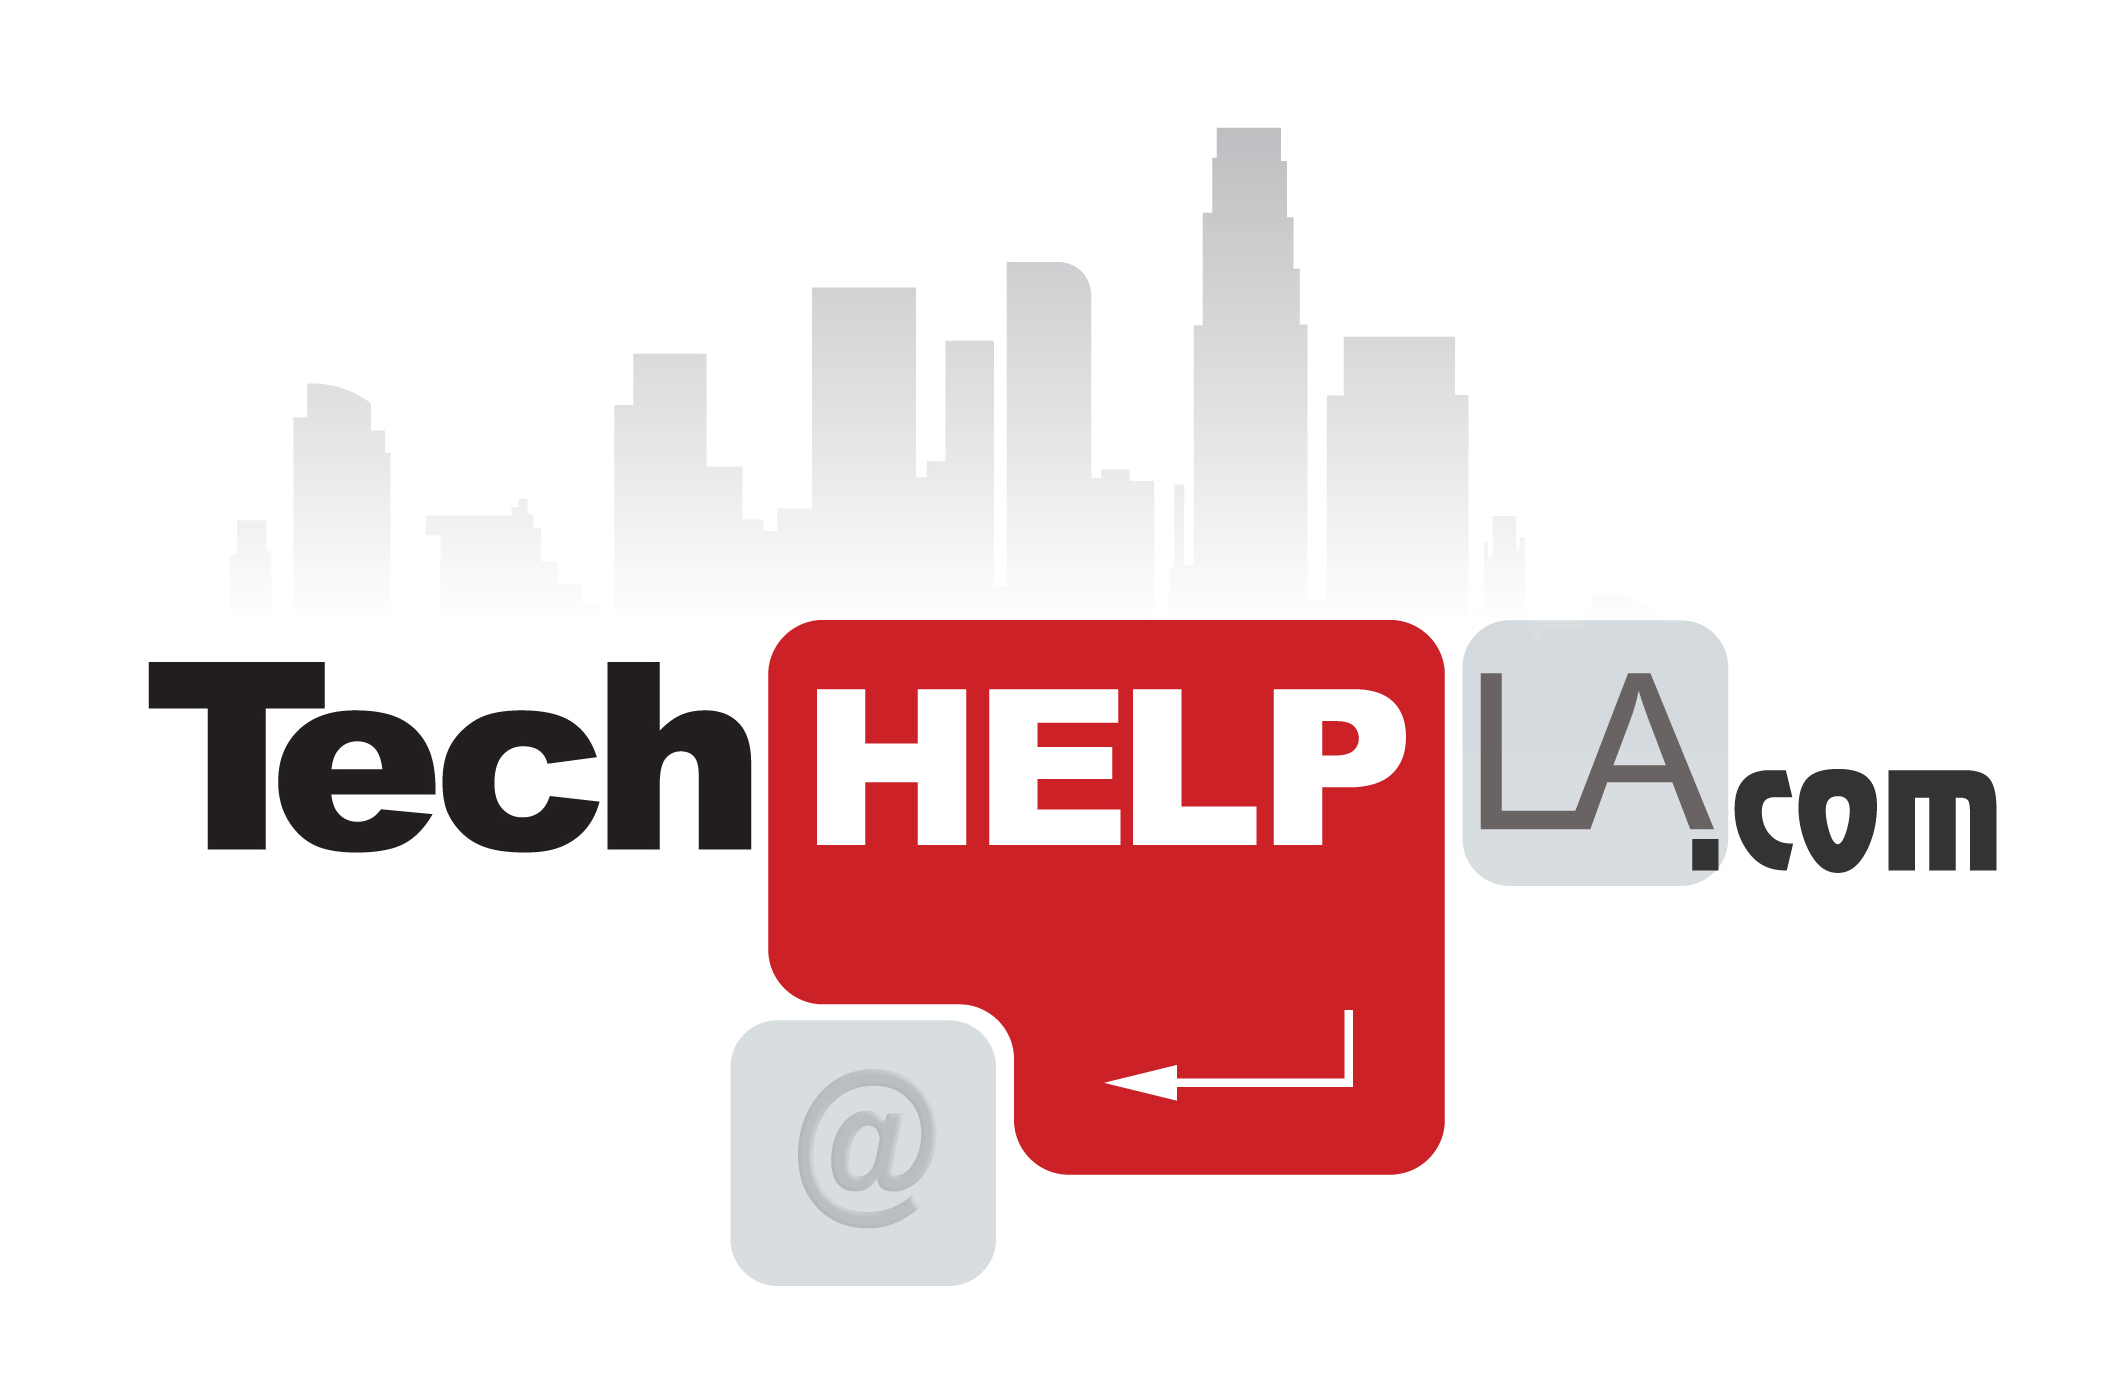 Tech Help LA (Live Chat) - Powered by Tech Help Corp USA